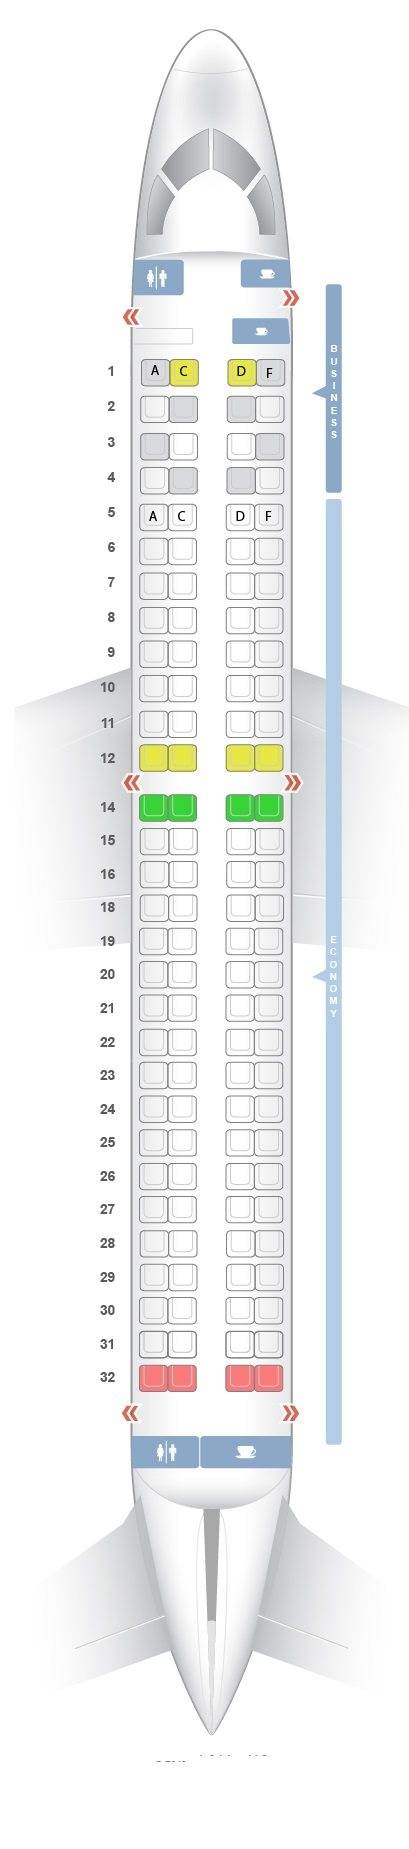 Схема салона и лучшие места в самолете airbus a319 авиакомпании s7 airlines